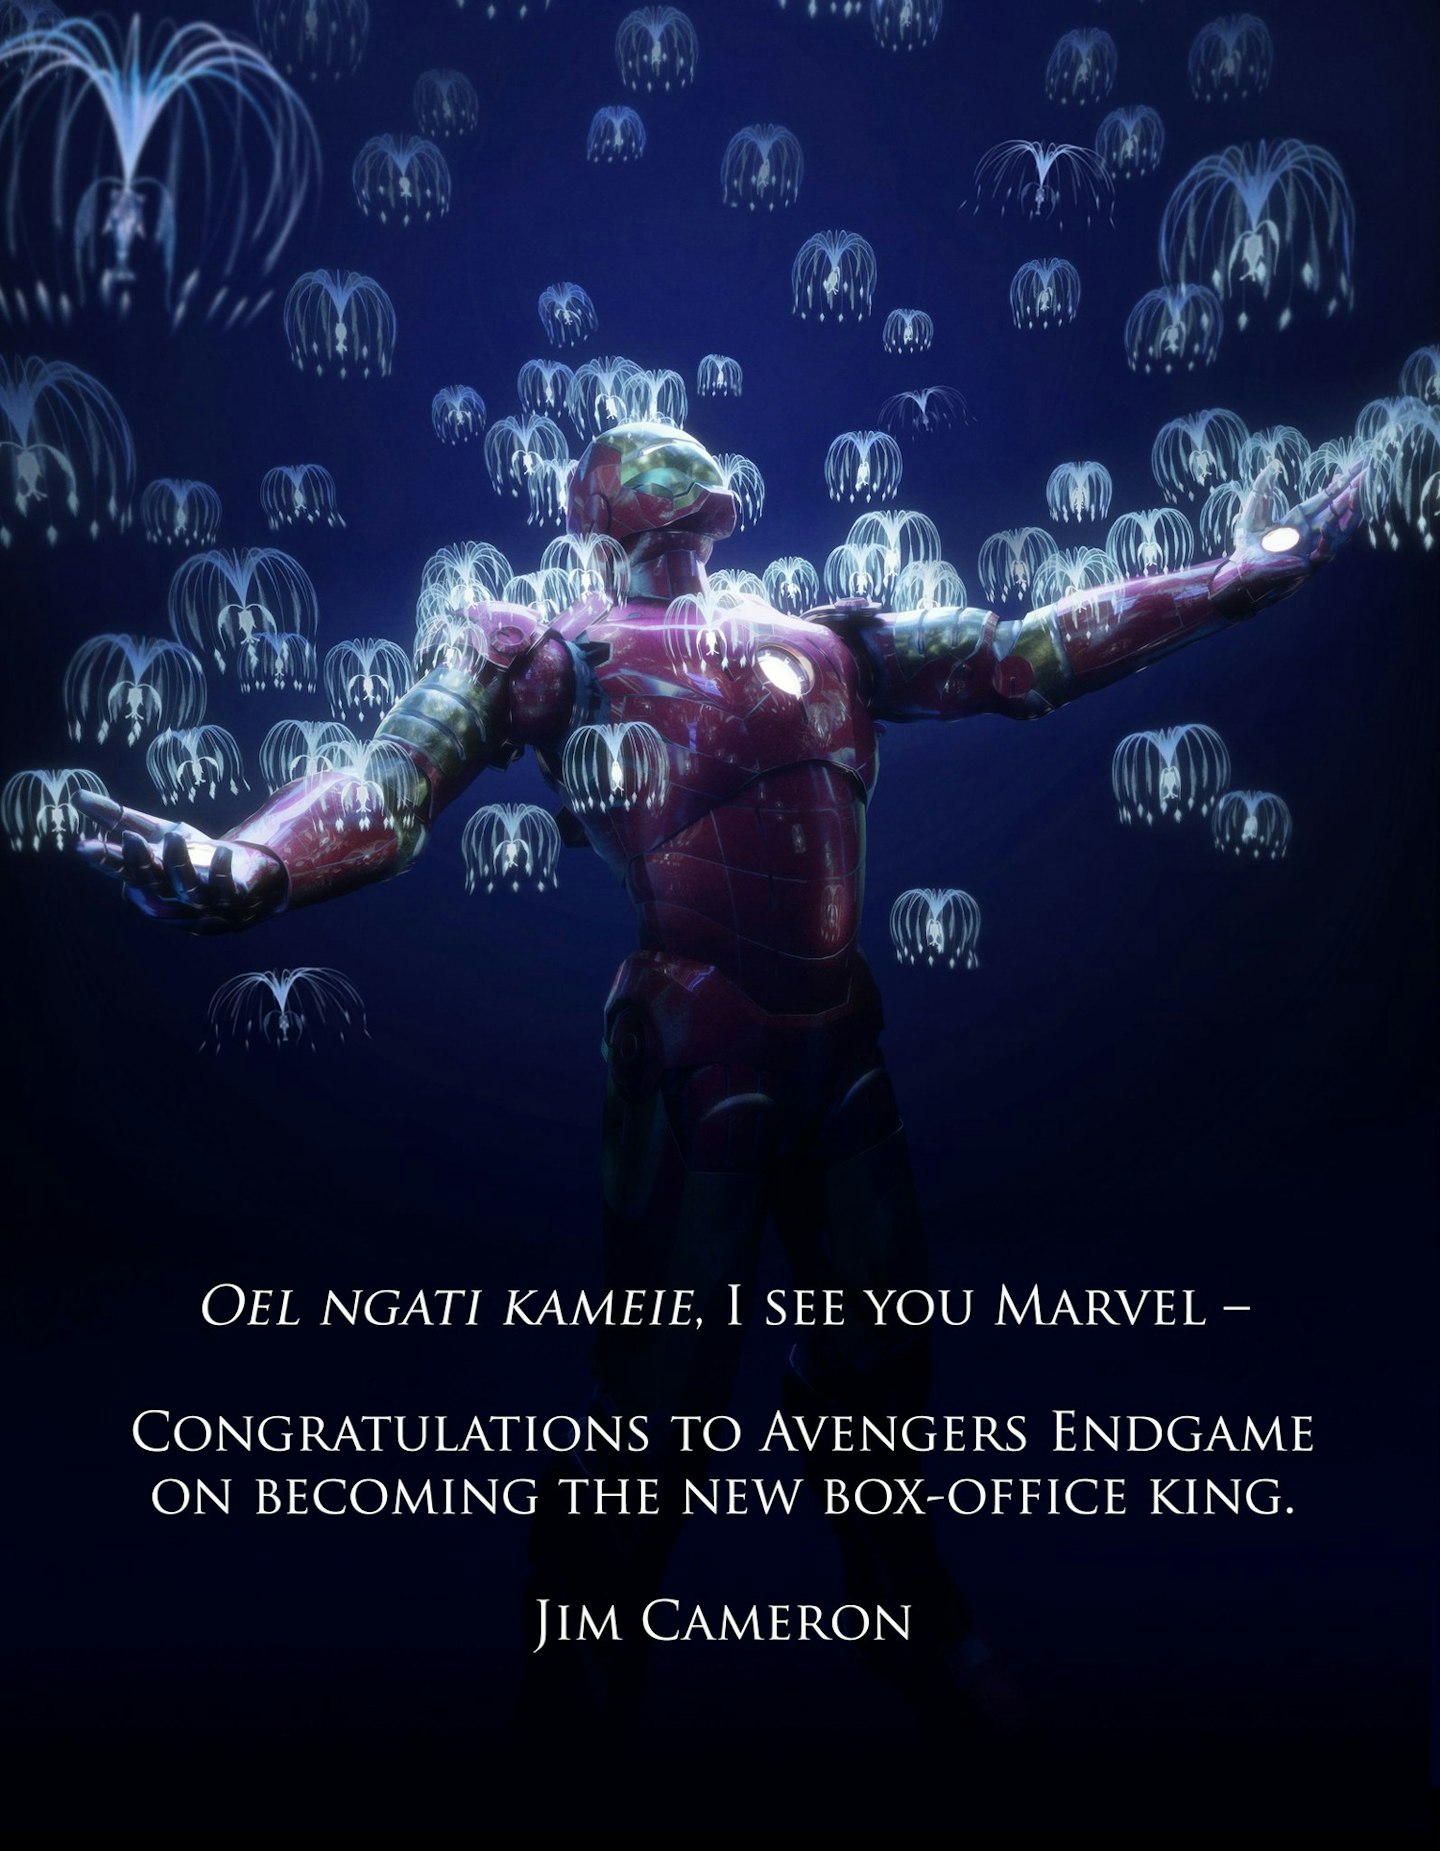 Avengers Endgame / Avatar / James Cameron